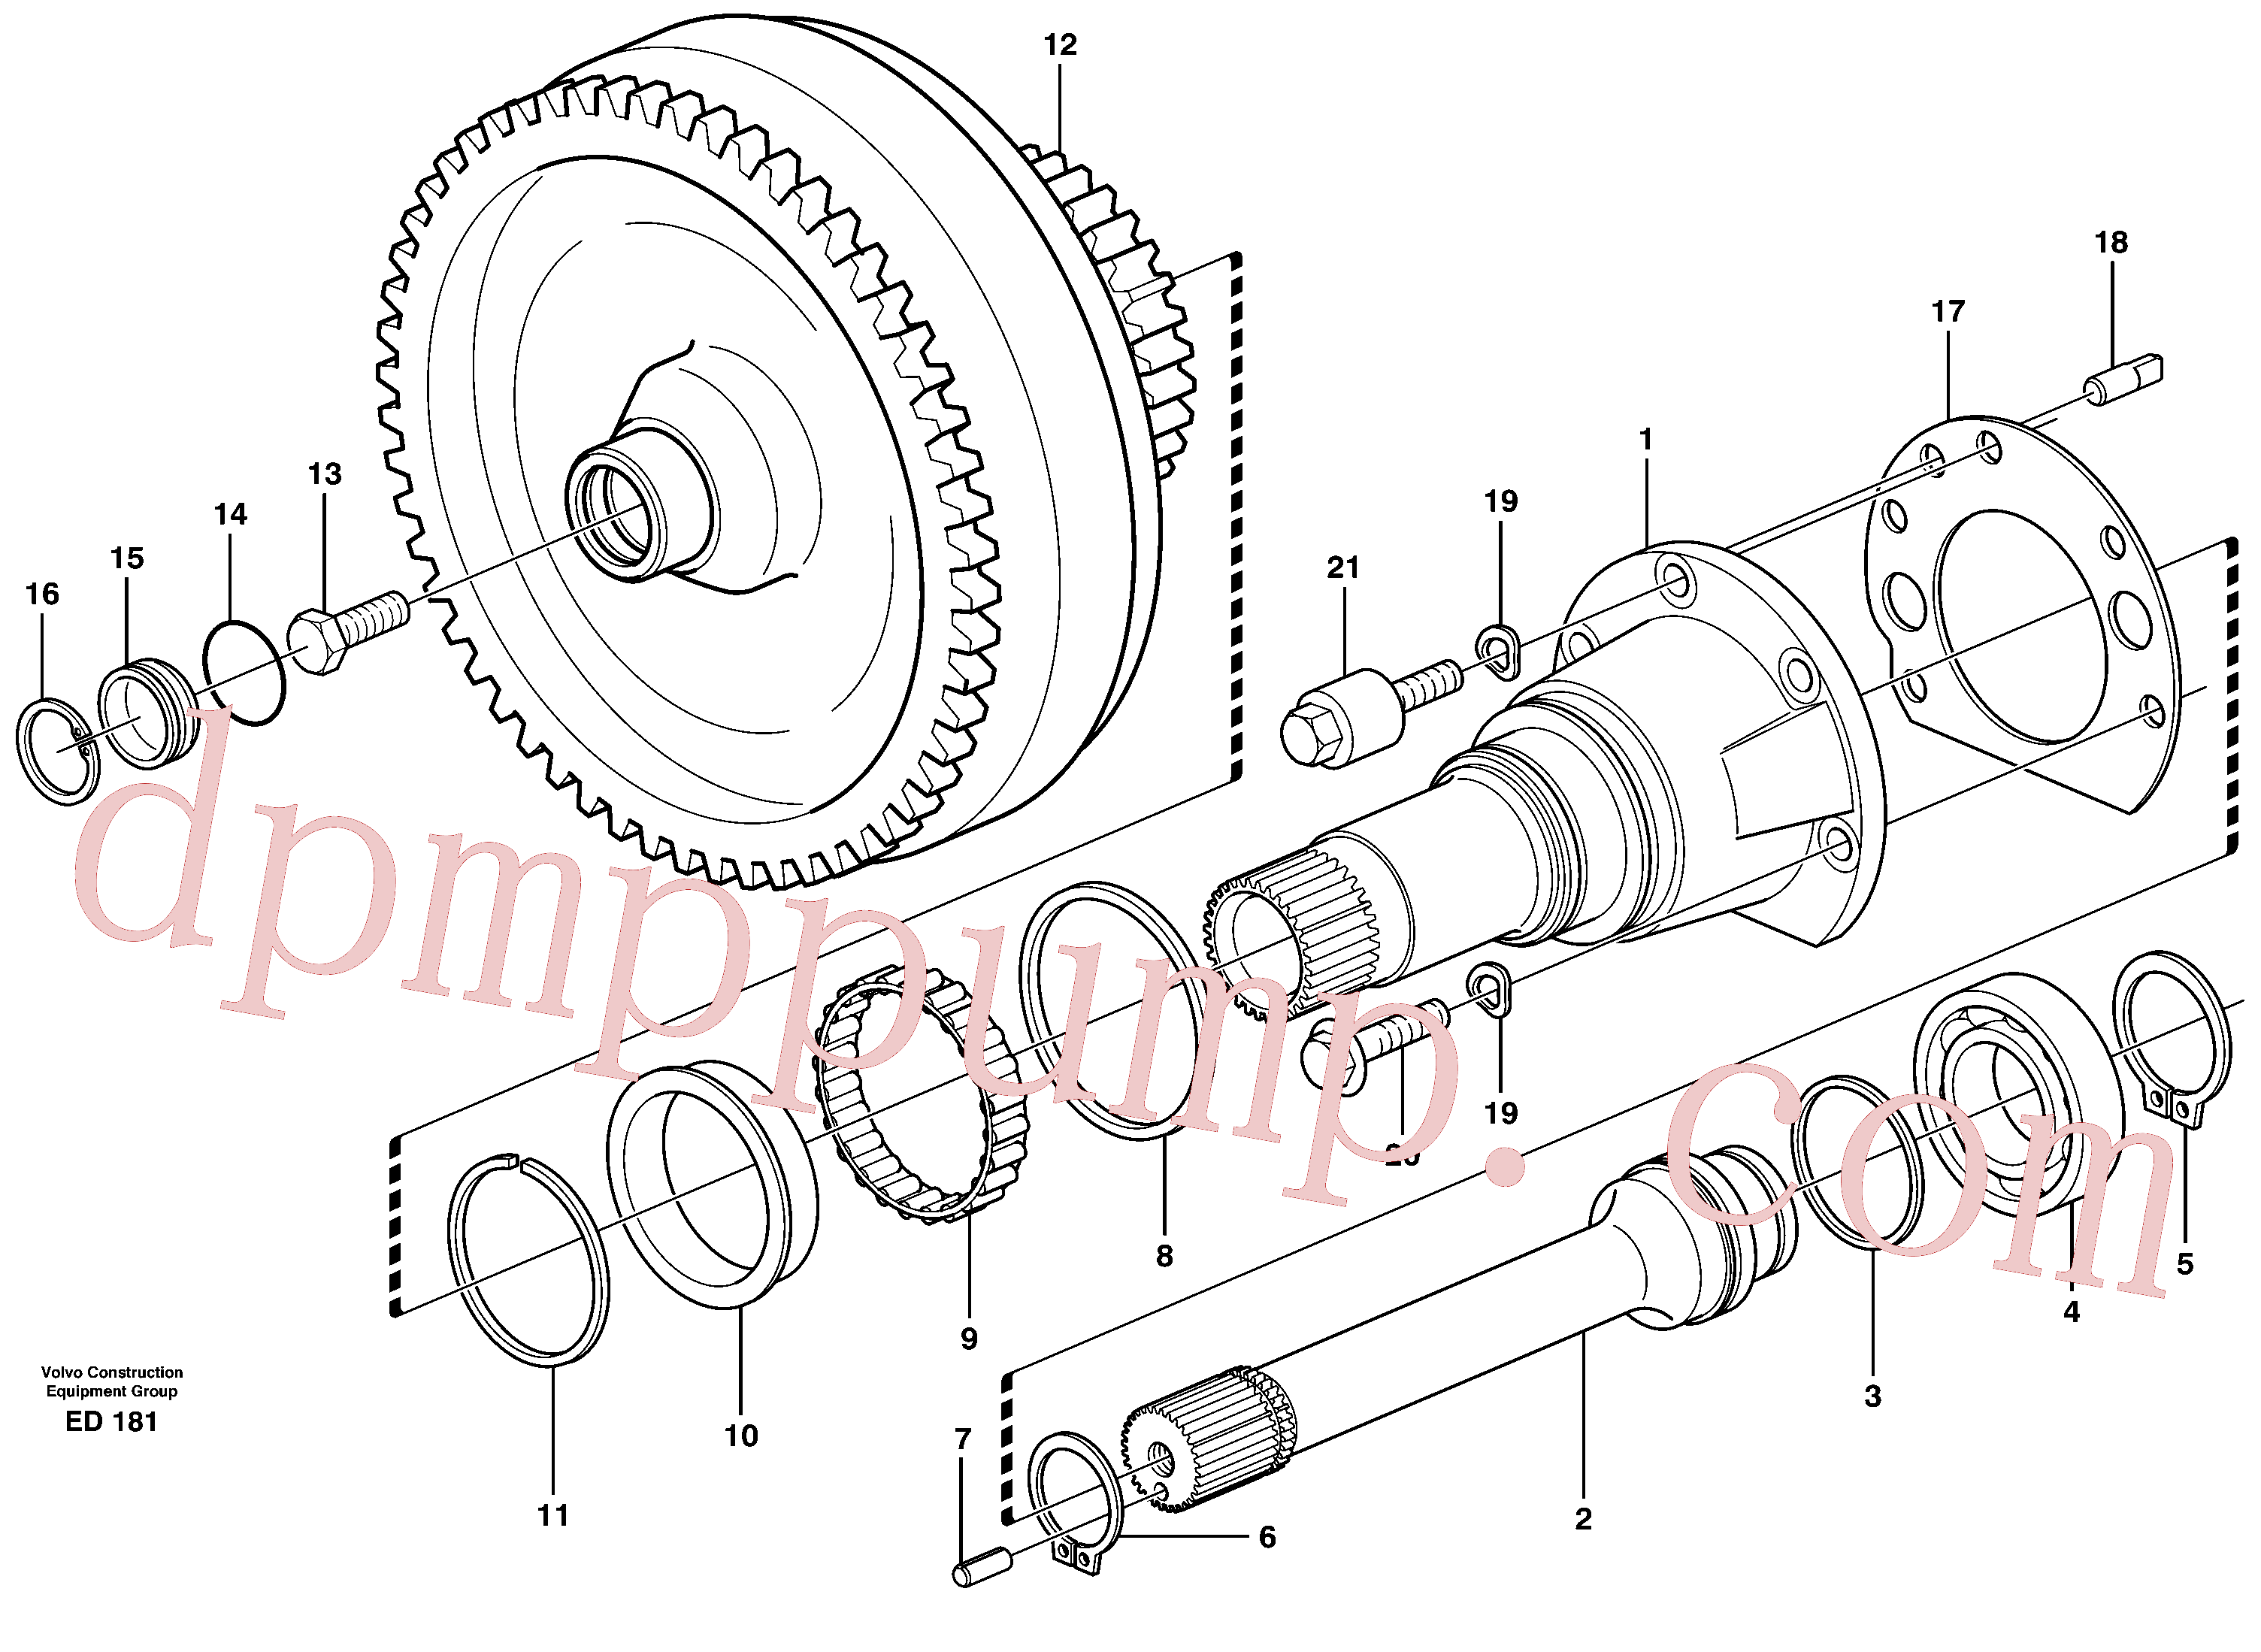 SA9541-01050 for Volvo Torque converter(ED181 assembly)